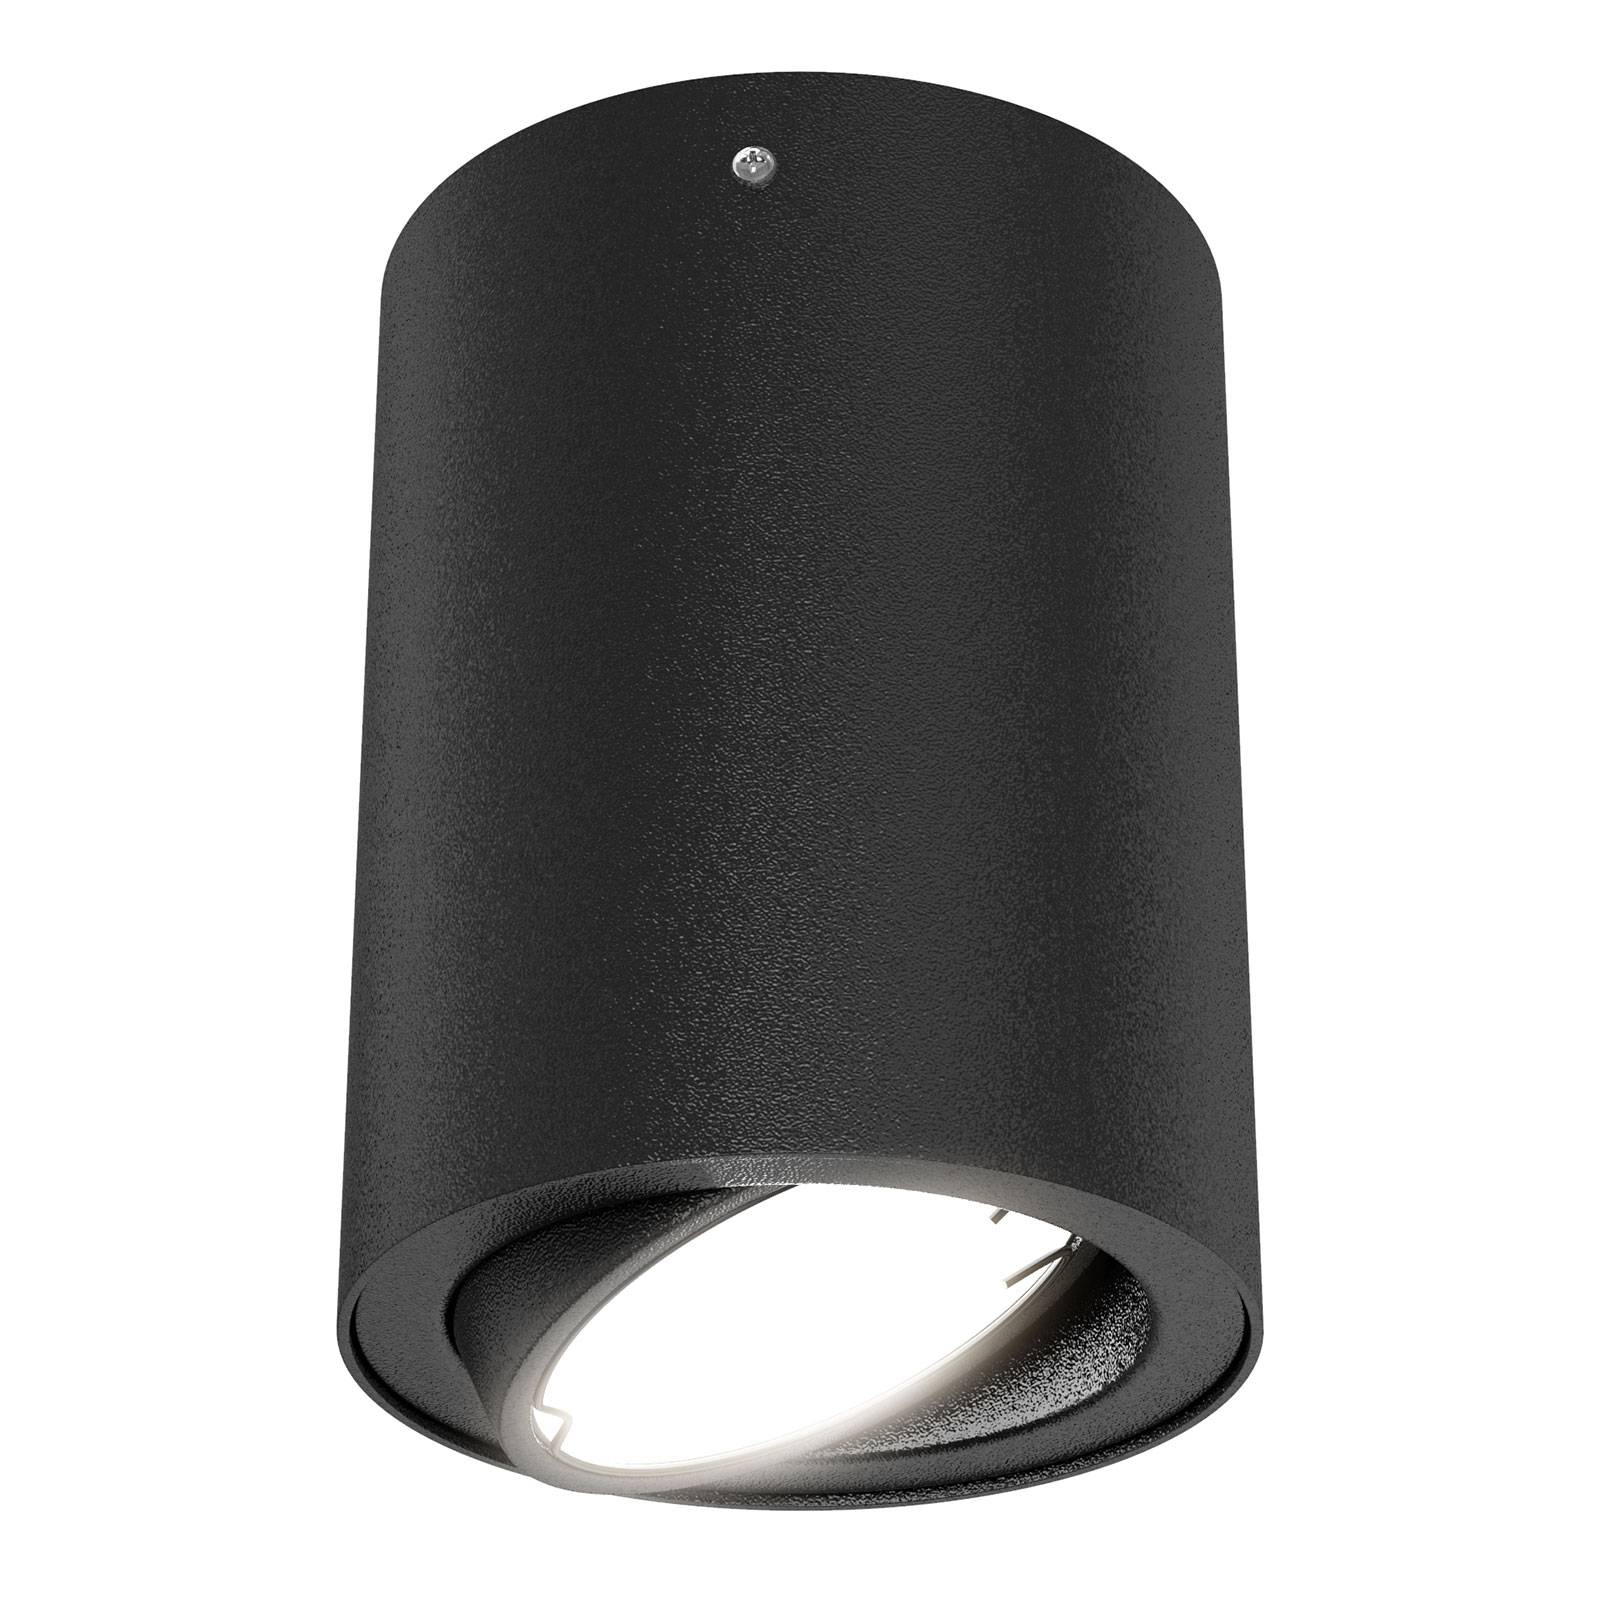 Lampa sufitowa LED 7119 z GU10 LED, czarna